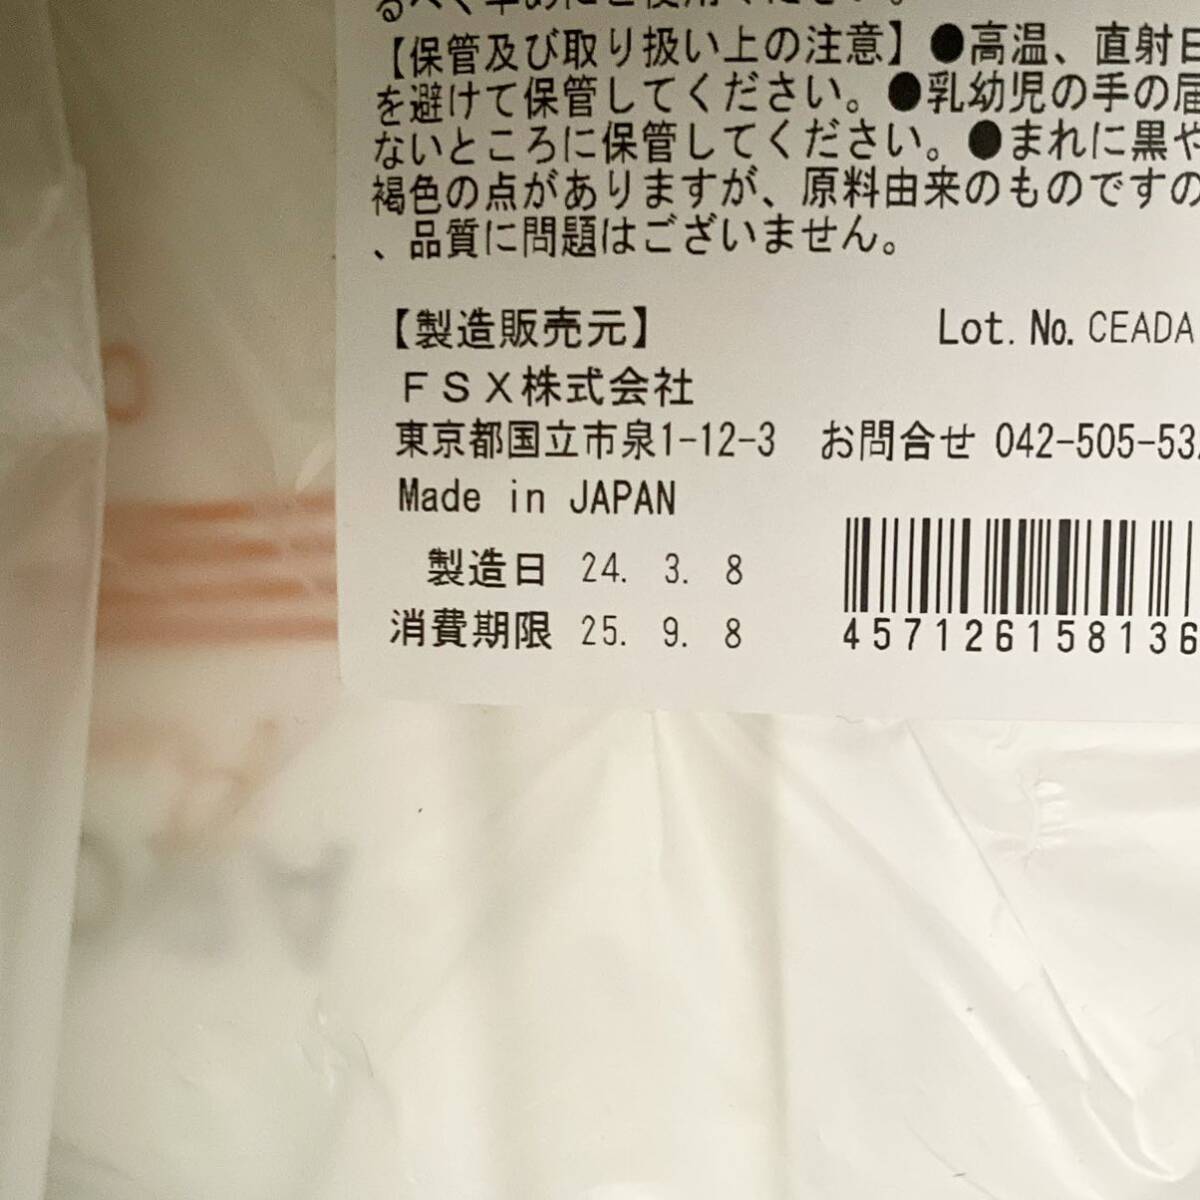  free shipping new goods 20 sheets paper wet towel oshibori aroma premium si tiger -ru peppermint lavender .u il s anti-bacterial citrus wet tissues 